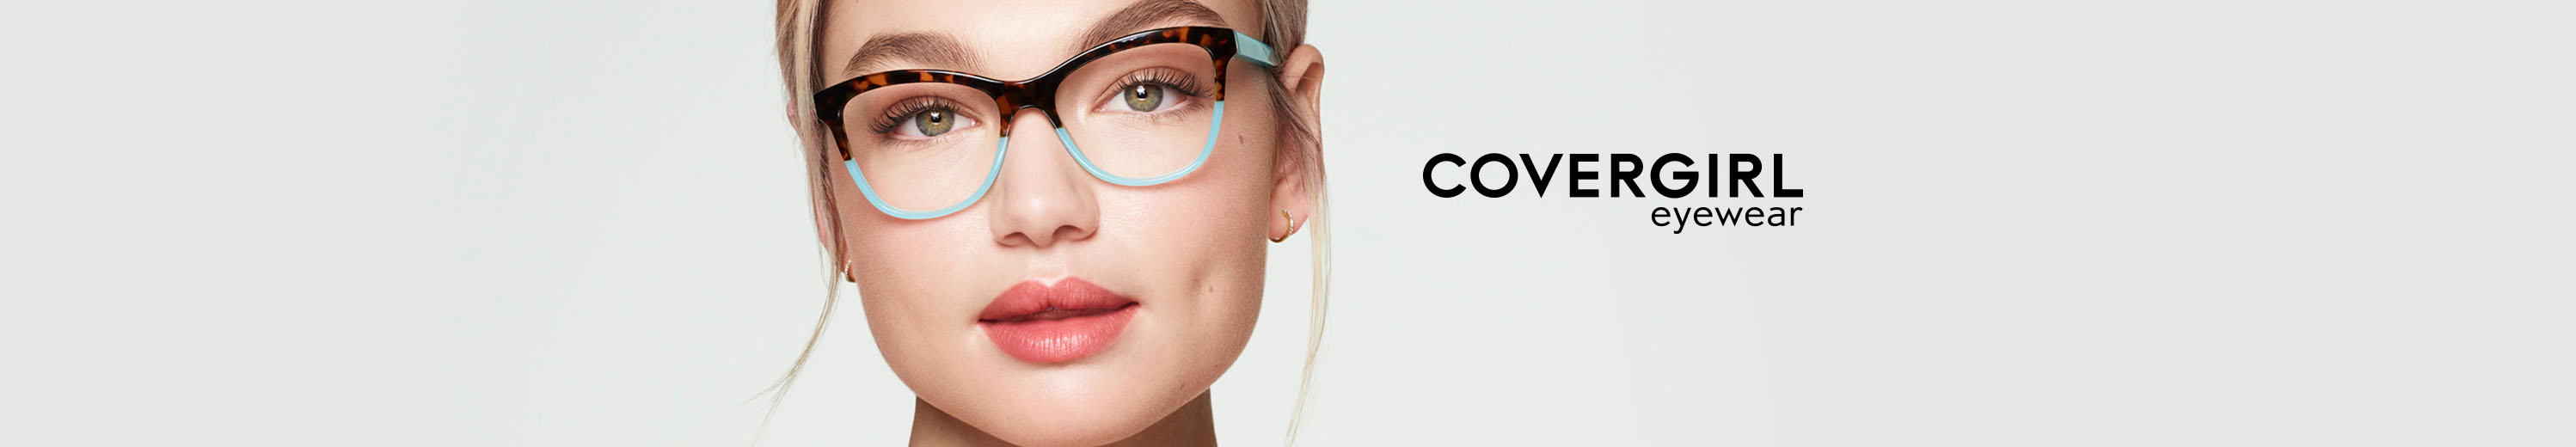 Covergirl Glasses and Eyewear